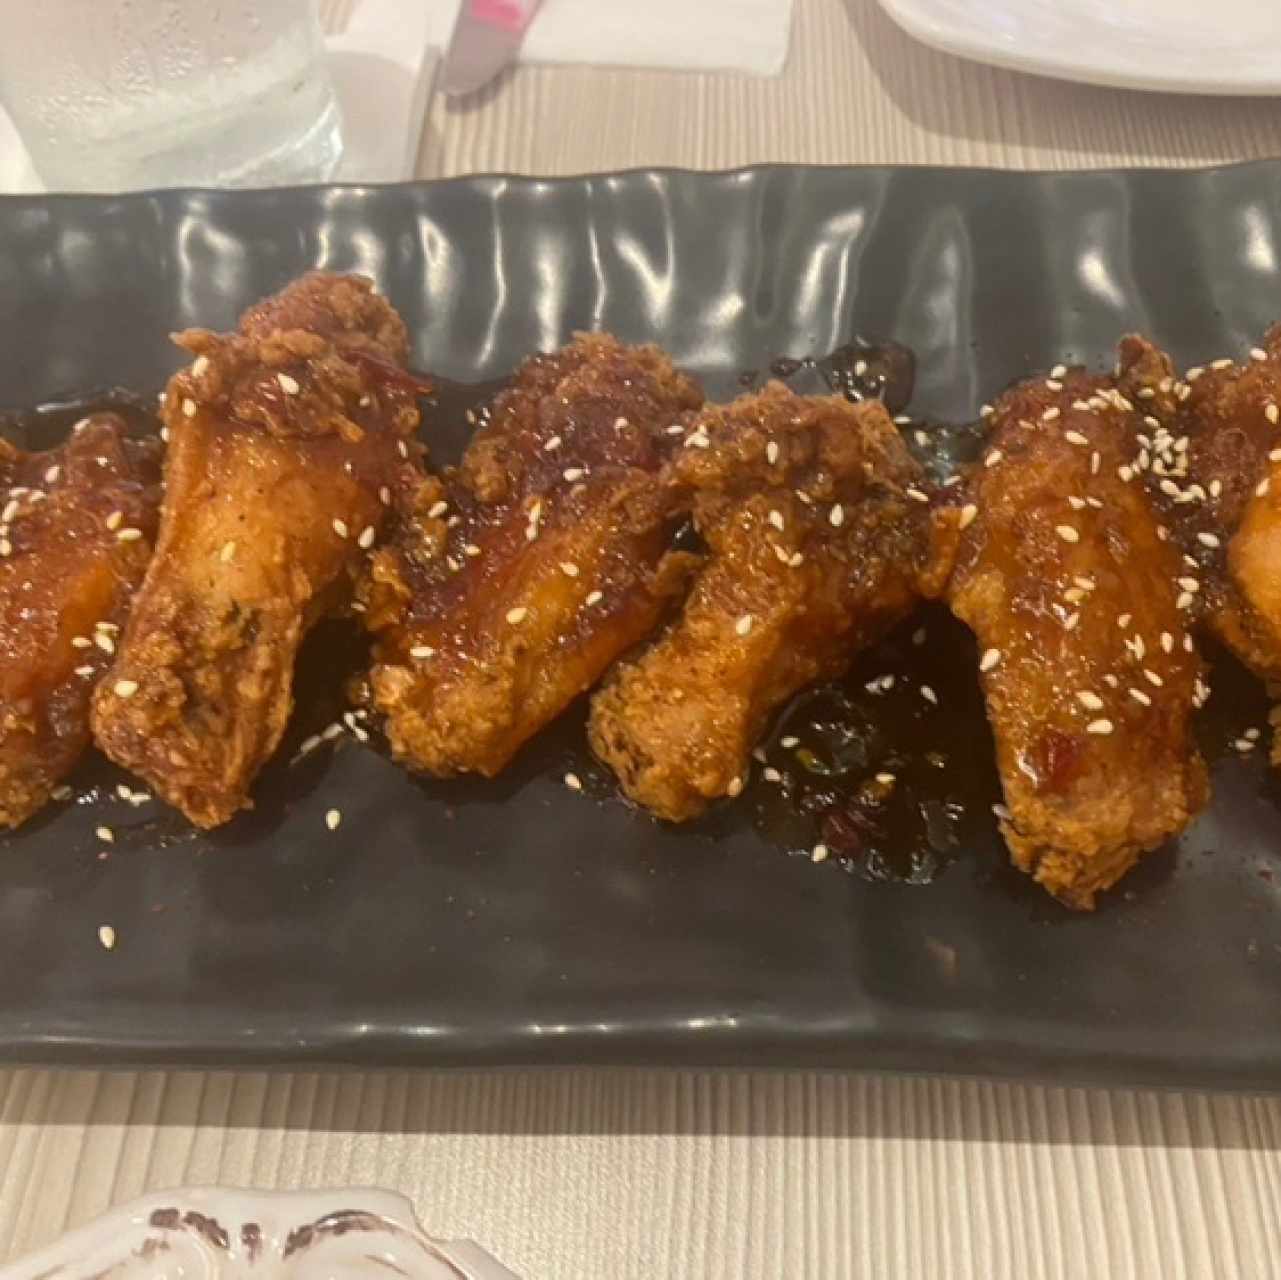 Sesame spice wings